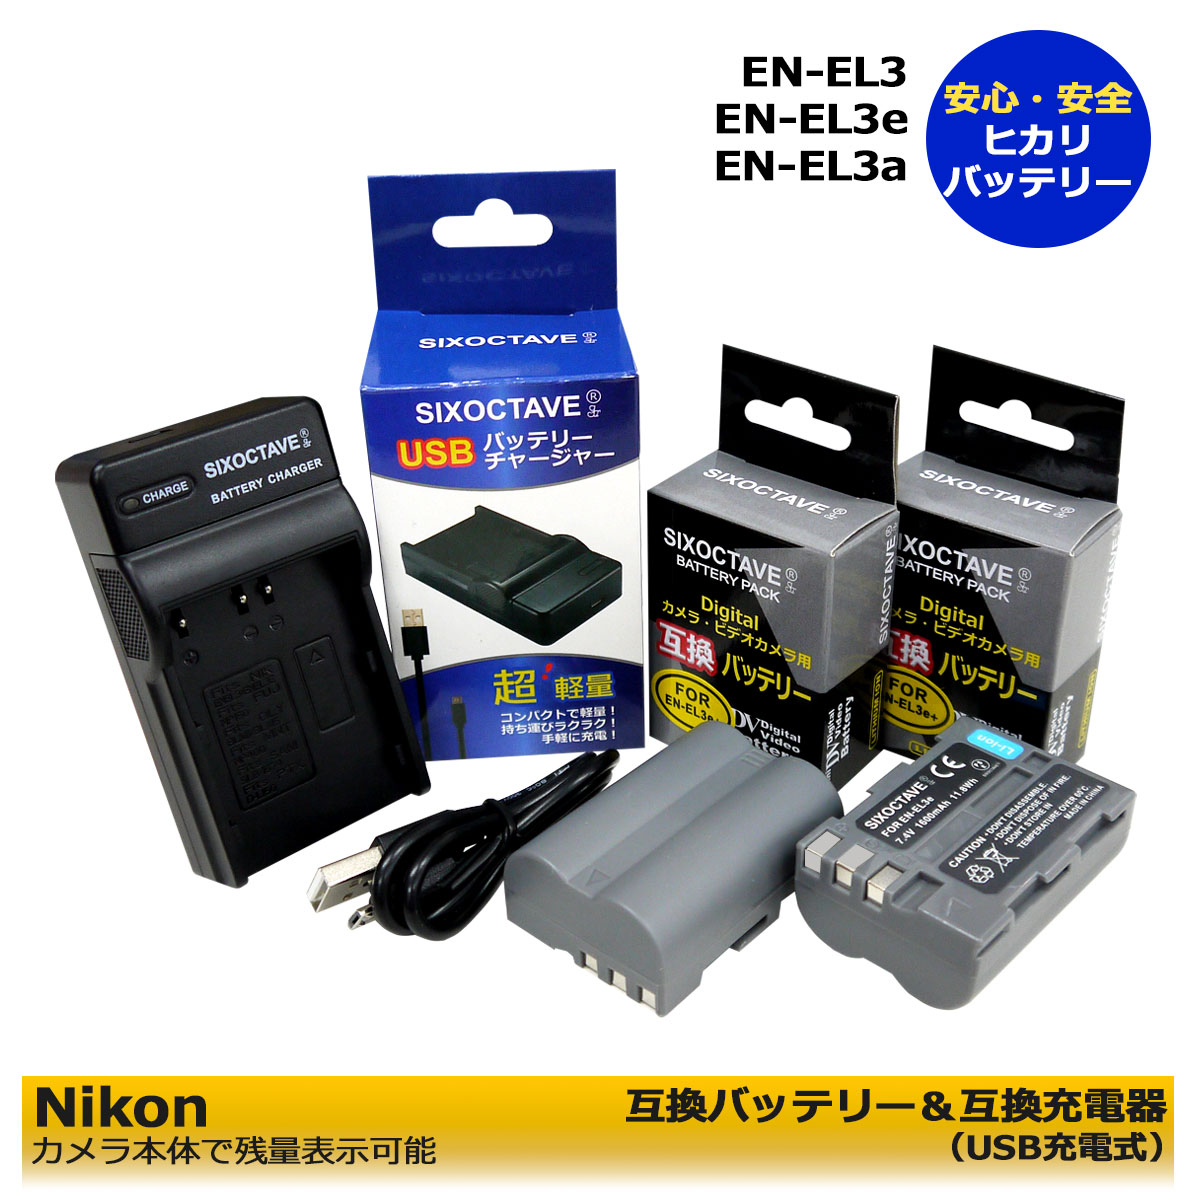 EN-EL3 / EN-EL3e / EN-EL3a 商品内容 互換バッテリー　2個 互換充電器（USB充電式）　1個 規格 【バッテリー】 形式：リチウムイオン サイズ: 55.8×21.0×39.5mm 電圧：7.4V 容量：1600mAh 重量: 75g 対応機種 【充電器】 入力：micro USB DC5V±5% 出力：DC 8.4V±5% 500mA 対応機種 D100 D100LS D200 D300 D300s D50 D70 D700 D70s D80 D90 クイックチャージャー MH-18a ワイヤレストランスミッター WT-4 【互換バッテリー】 EN-EL3 / EN-EL3e / EN-EL3a 【対応充電器】 MH-18 / MH-18a 【対応グリップ】 MB-D10 MB-D80 MB-D90 MB-D300 仕様 【バッテリー】 ●残量表示可能。 ●純正＆互換の充電器で充電可能。 ●認証：PSEマーク（電気用品安全法）取得製品。 ●認証：CEマーク（欧州連合安全規制）取得製品。 【充電器】 ●USB端子がある機器に接続し、どこでも充電可能 ●超軽量で携帯に大変便利。 ●充電中は赤ランプ、充電完了後は緑ランプでお知らせ。 ●認証：CEマーク（欧州連合安全規制）取得製品。 ●純正＆互換バッテリーも充電可能。 ☆本製品には過電流保護、過充電防止、過放電防止の保護回路が内蔵。 保証：6ヶ月（PL保険（生産物賠償責任保険）加入済み。 ご購入日より6ヶ月の安心保証付き！ 届出事業者名：SIXOCTAVE PSマークの種類：PSE